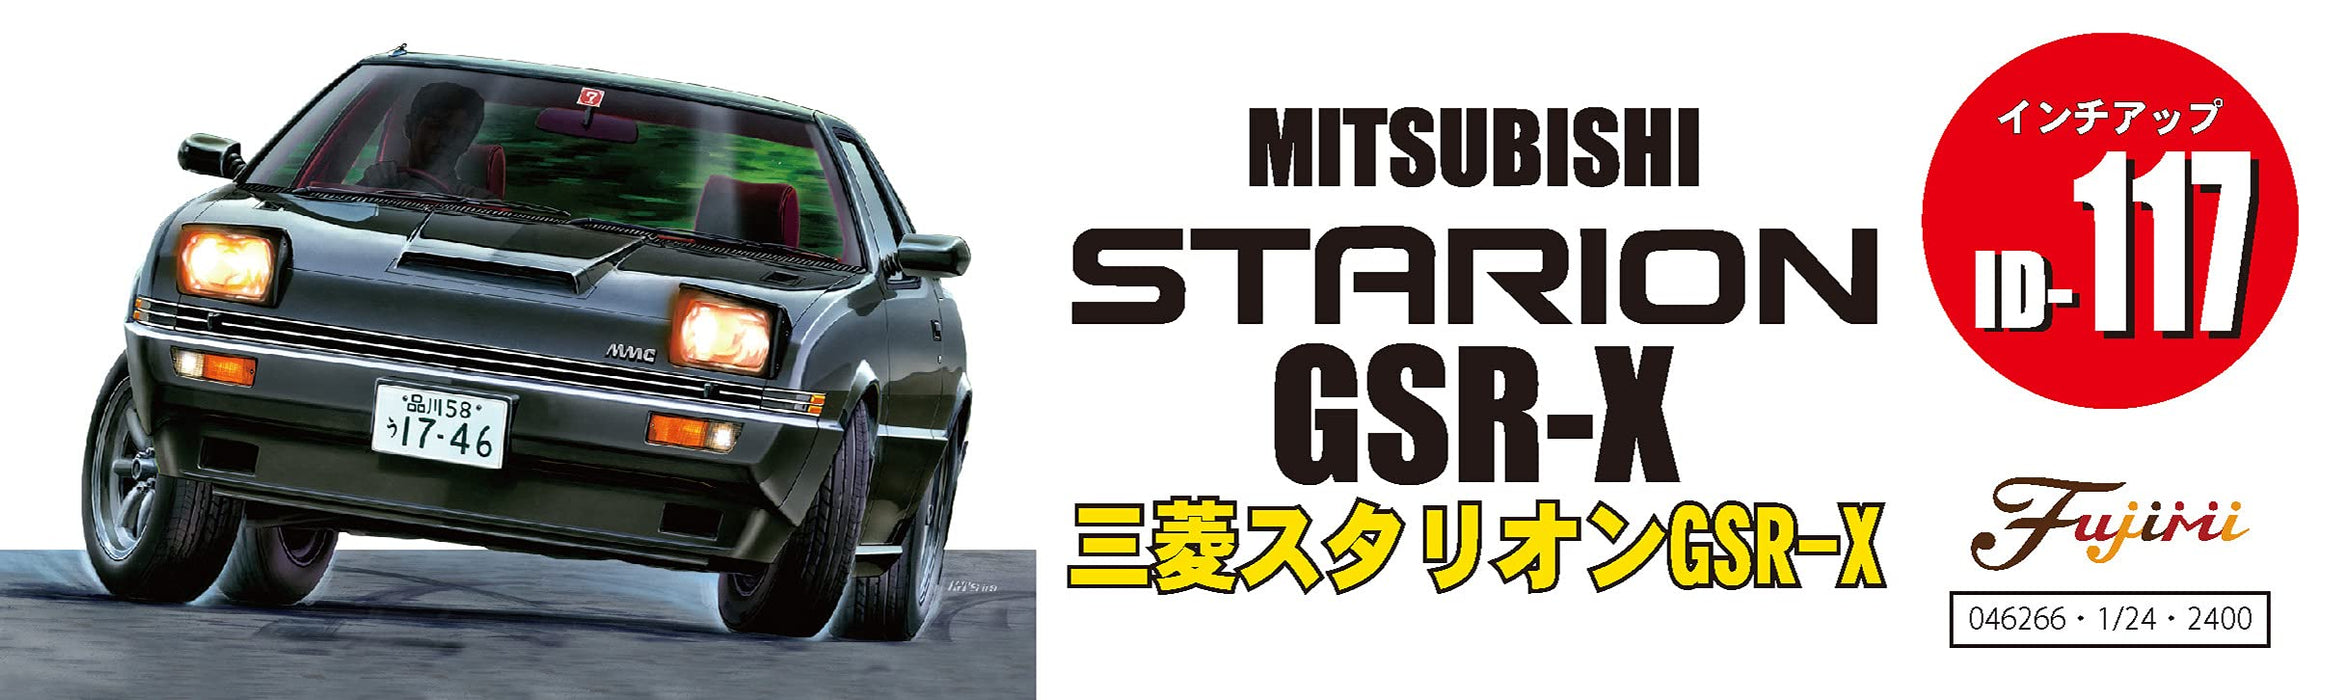 FUJIMI Inch Up 1/24 No.117 Mitsubishi Starion Gsr-X Plastic Model